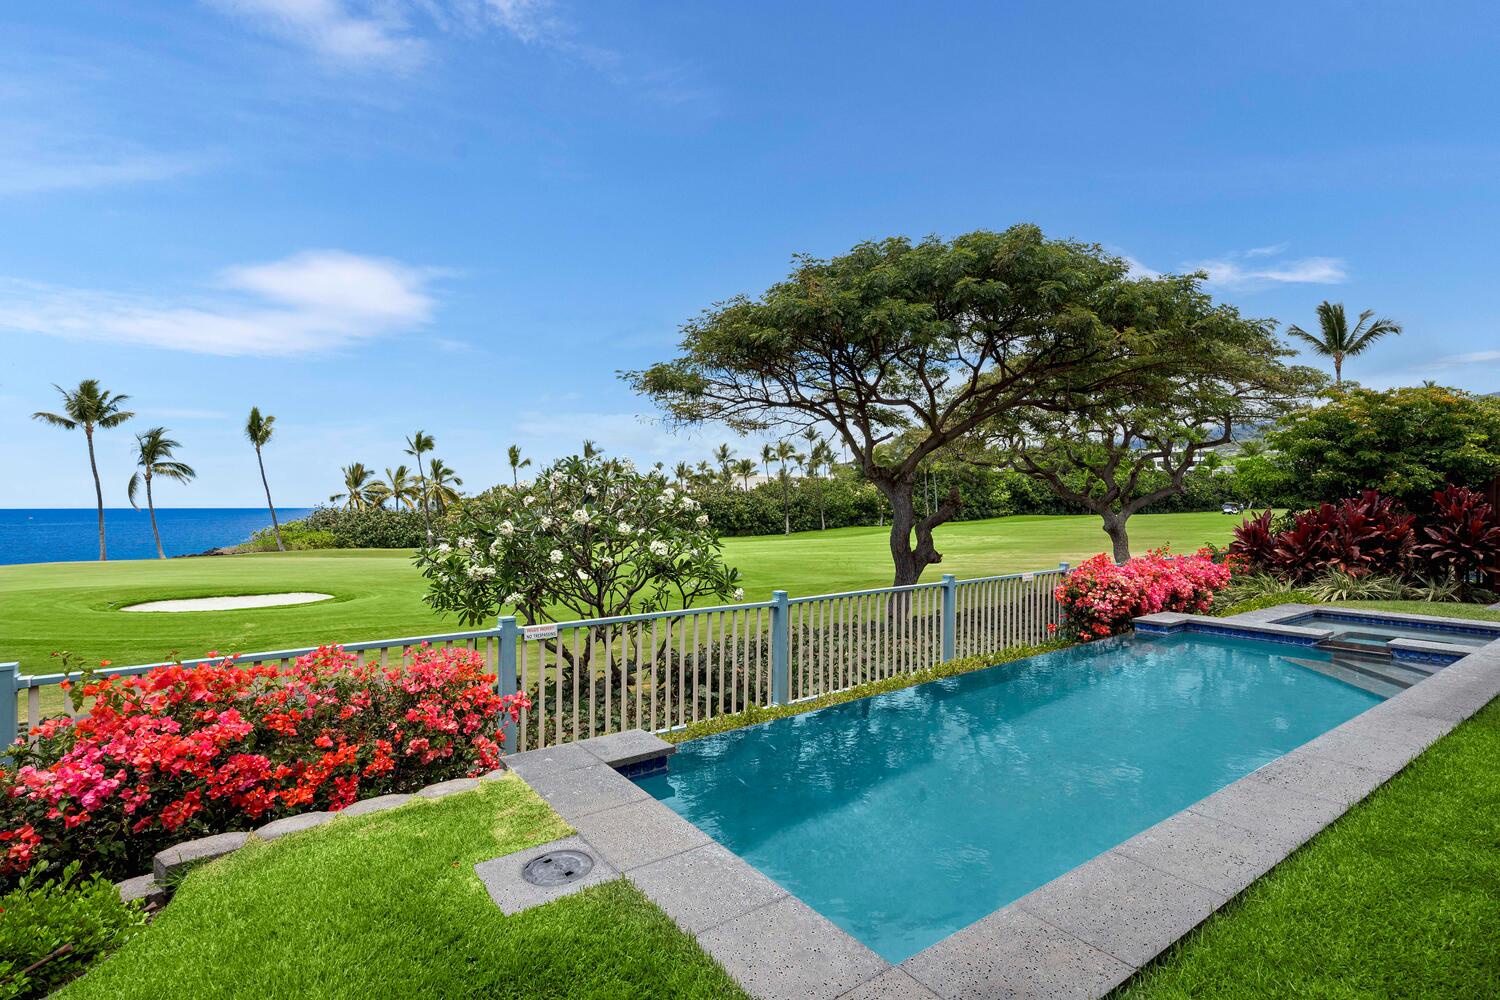 Kailua-Kona Vacation Rentals, Holua Kai #26 - Beautiful poolside view overlooking a lush golf course.